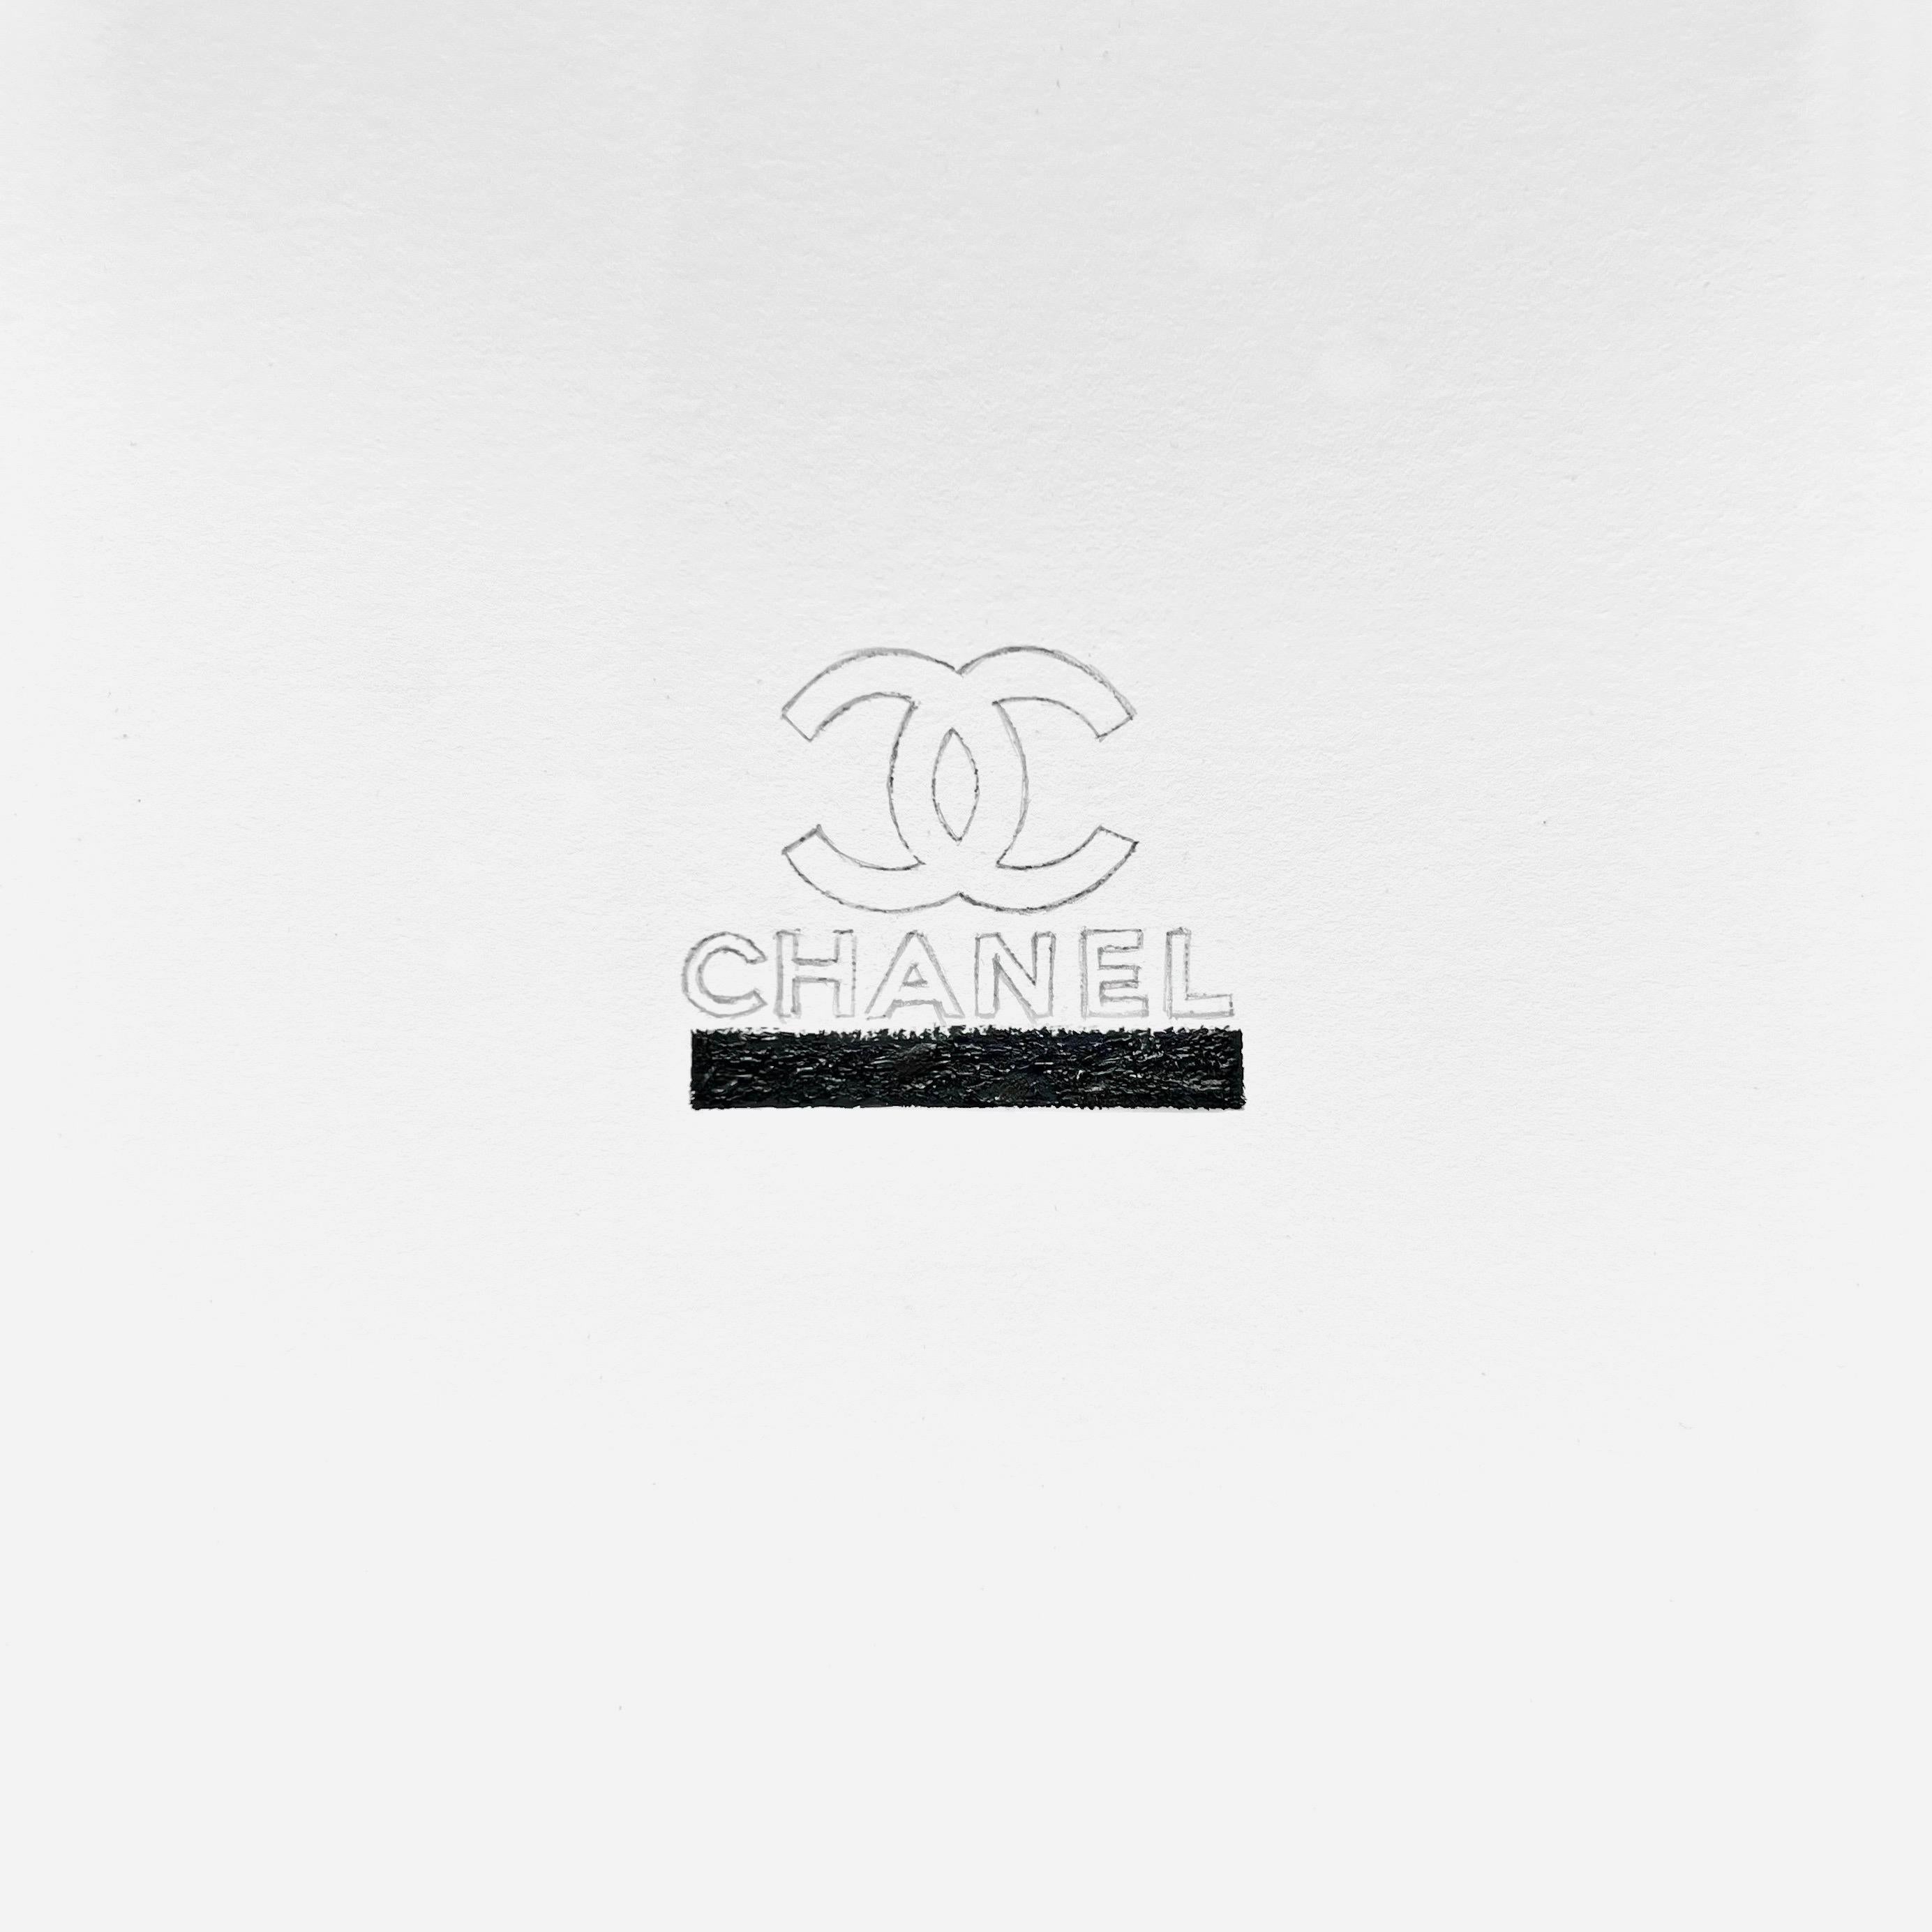 Andrea Stajan-Ferkul Still-Life - Only Chanel - 6"x6", Artwork On Paper, Pencil Logo, Black and White 